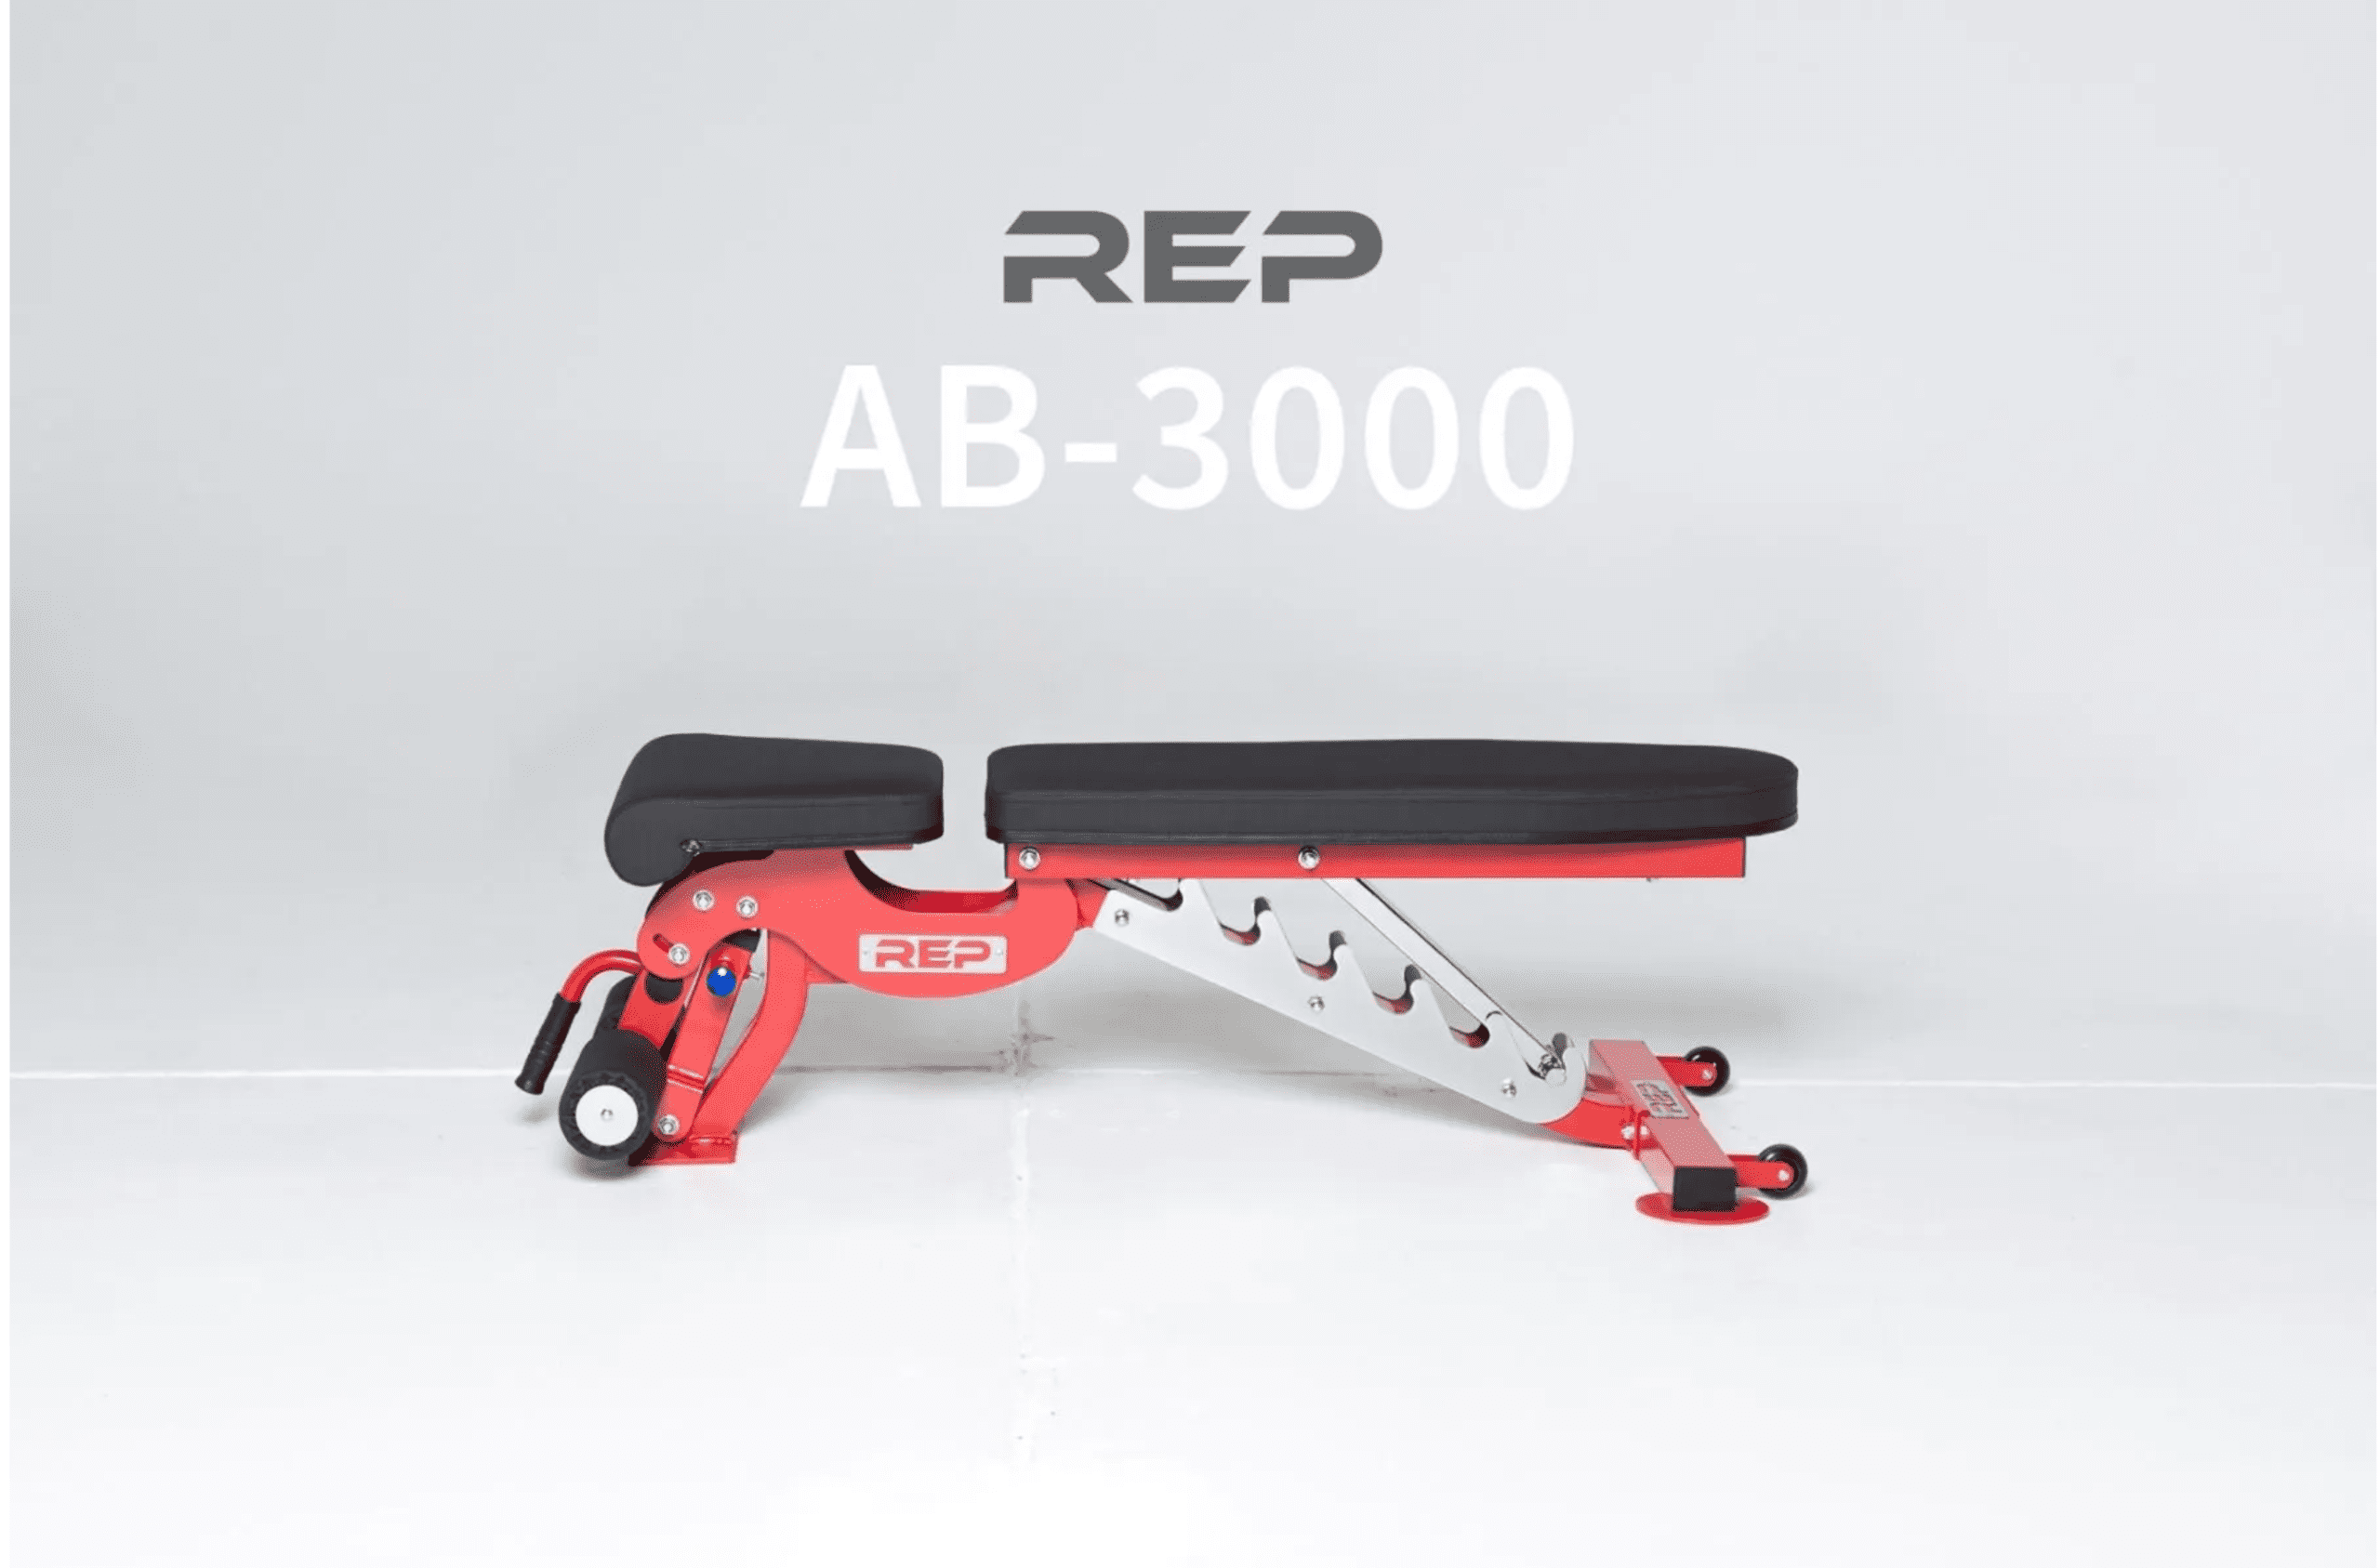 AB-3000 FID Adjustable Bench